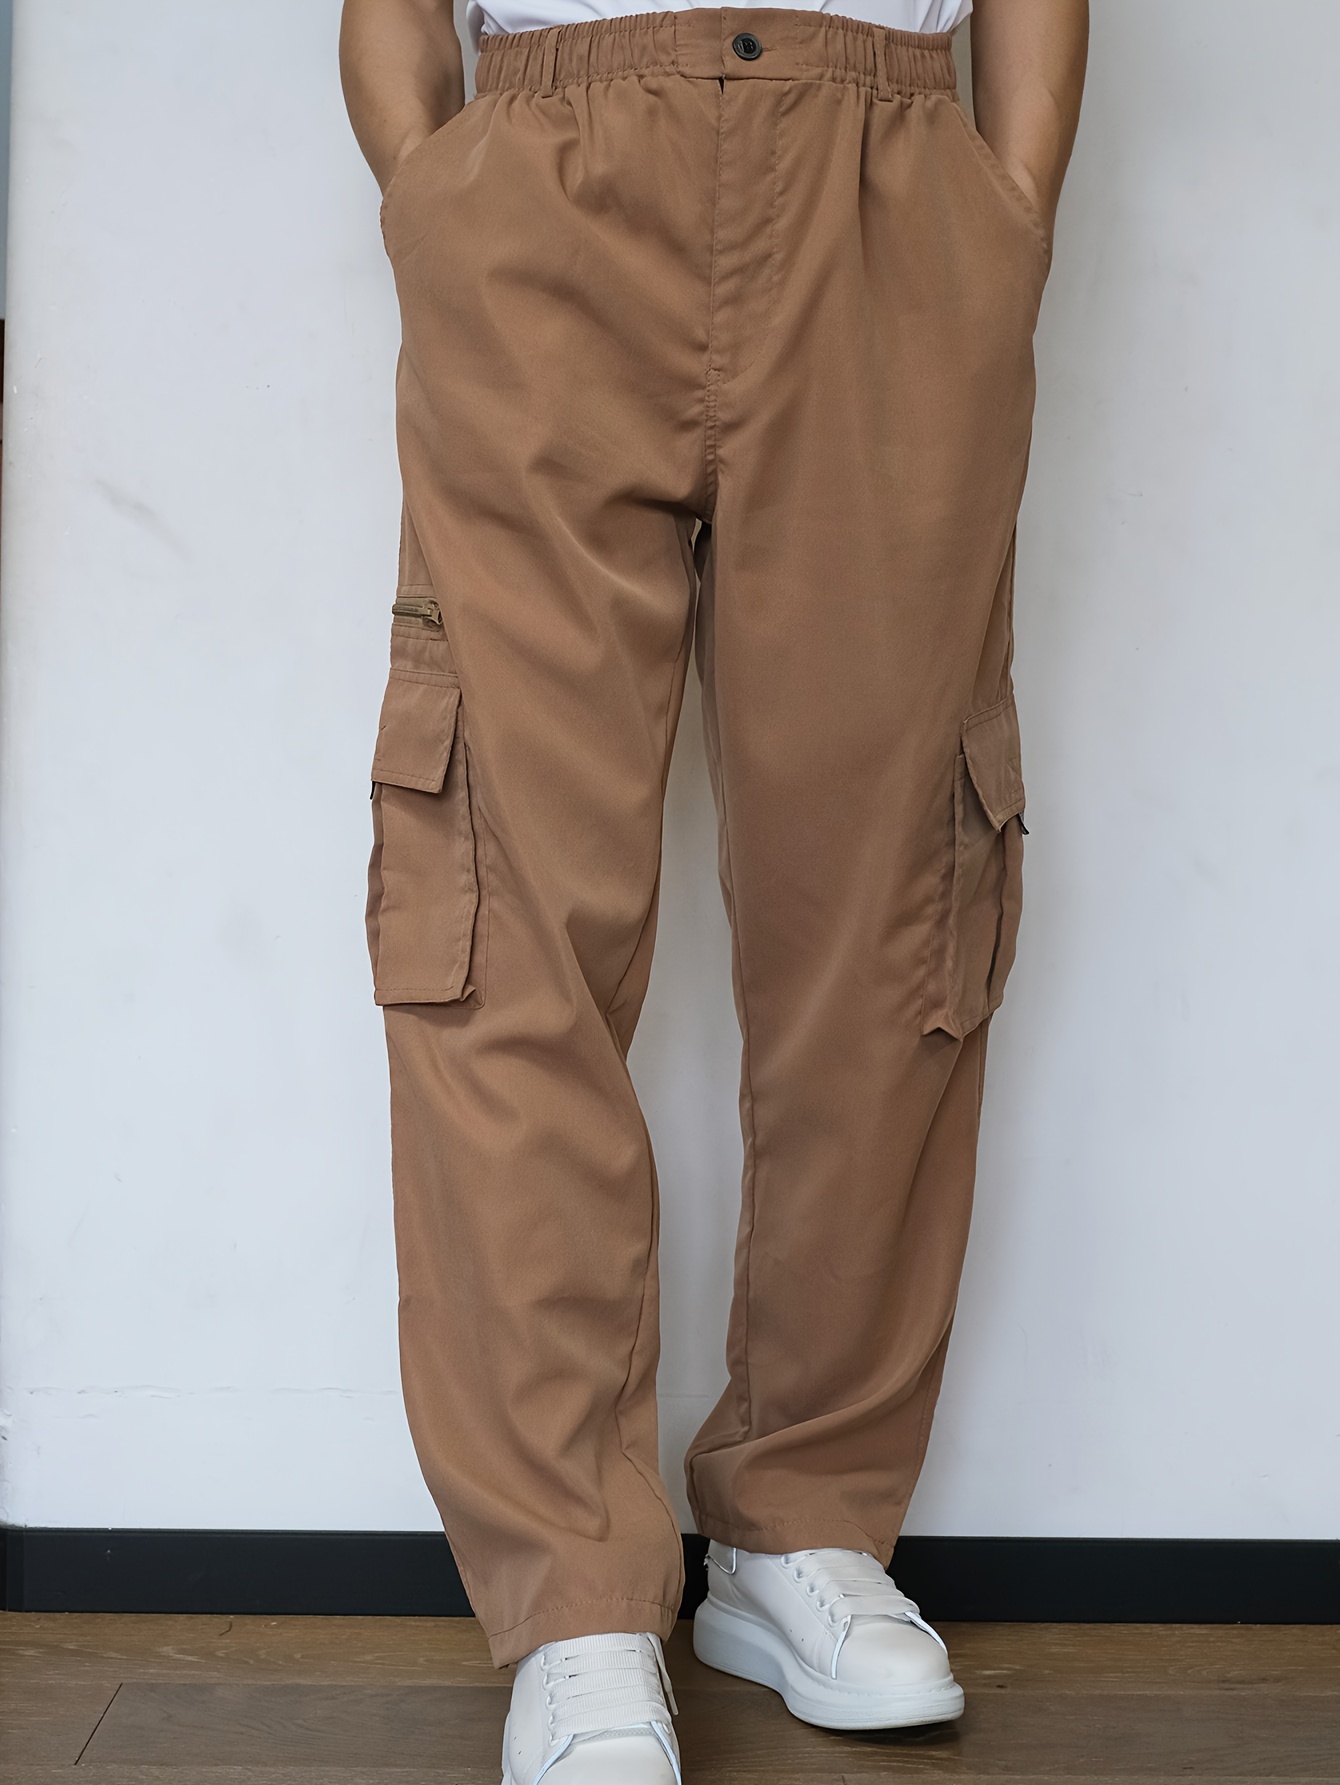 Odeerbi Men's Plus Size Casual Cargo Pants Fashionable Outdoor